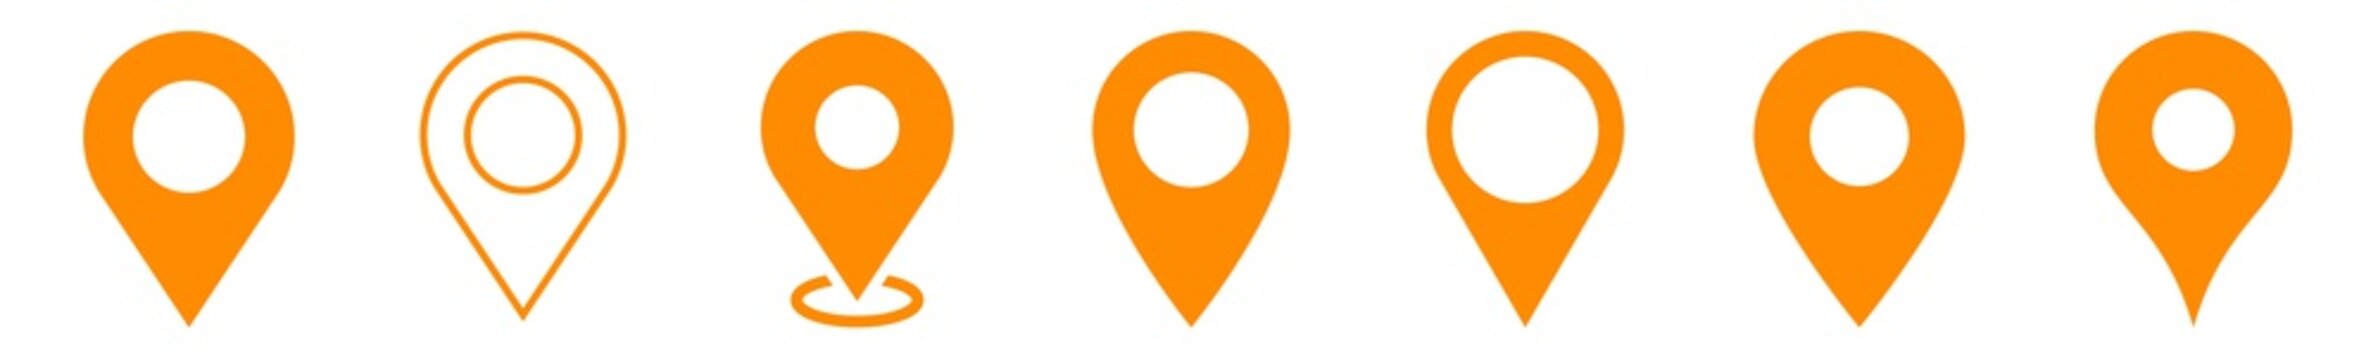 Location Pin Icon Orange | Map Marker Illustration | Destination Symbol | Pointer Logo | Position Sign | Isolated | Variations